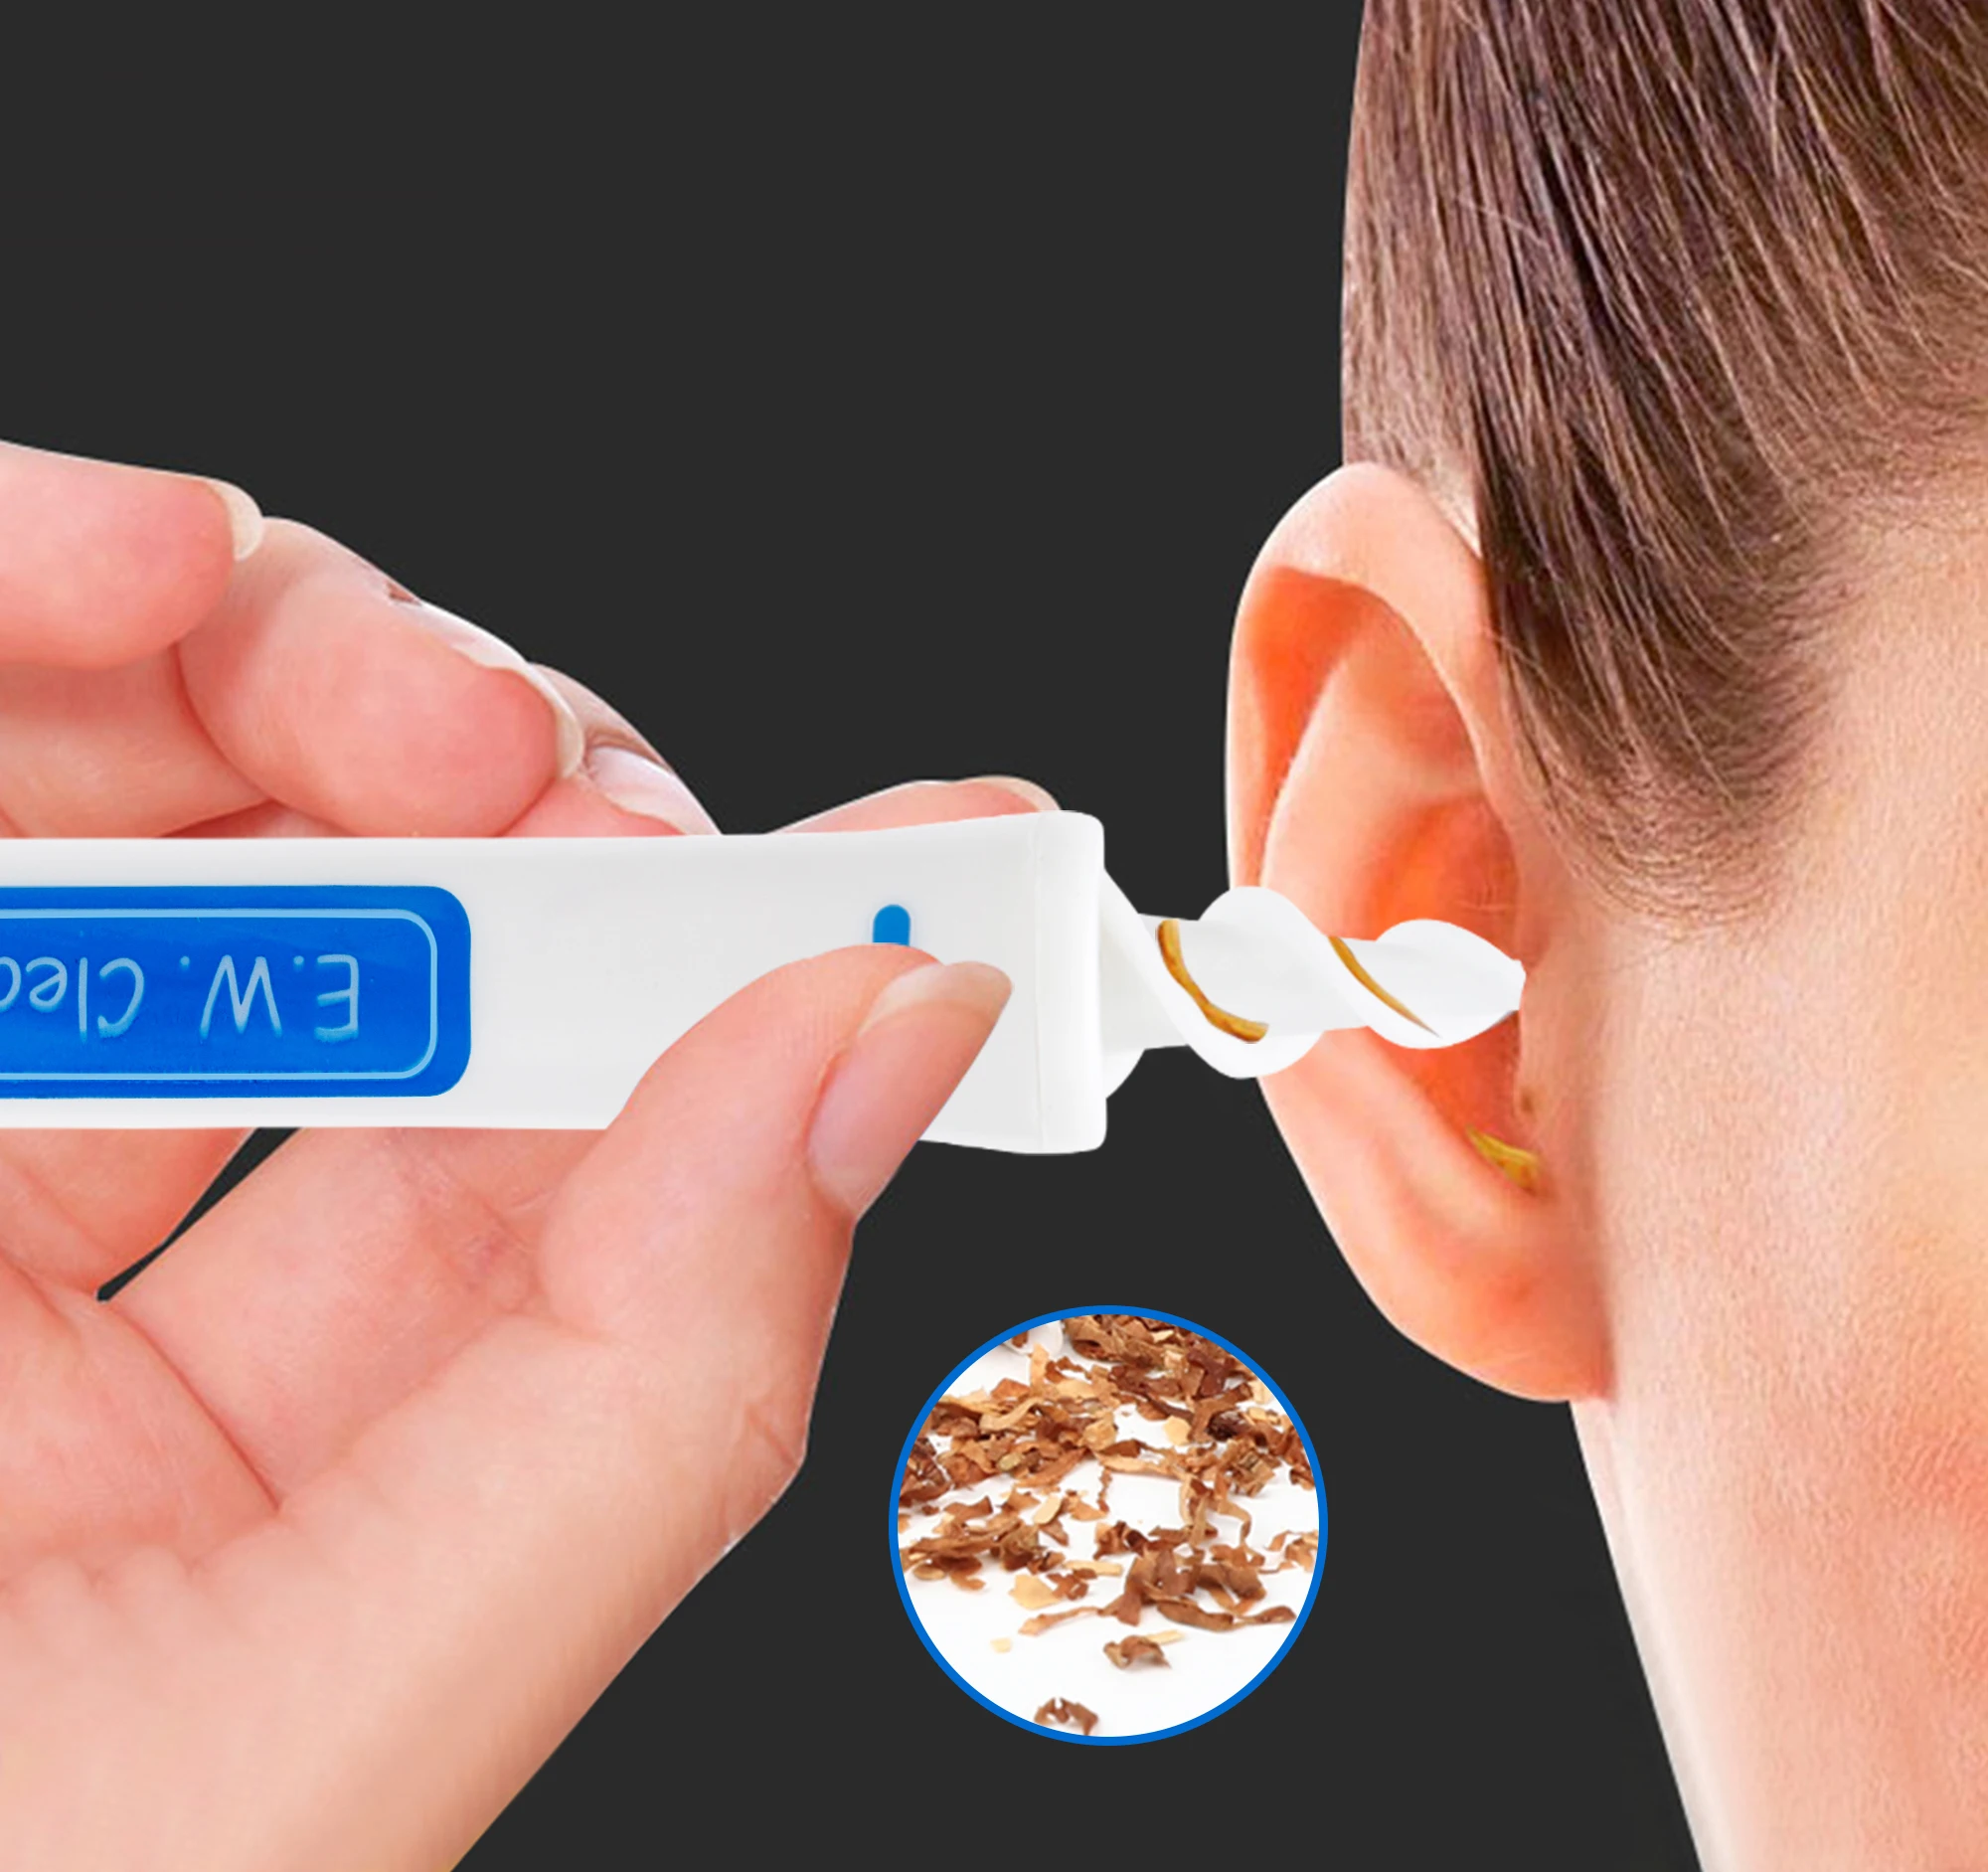 

2021 New Ear Cleaner Spiral Soft Swab Pick Tool Set Q-Grips+16pcs Ear Wax Removal Tool, Blue, or custom